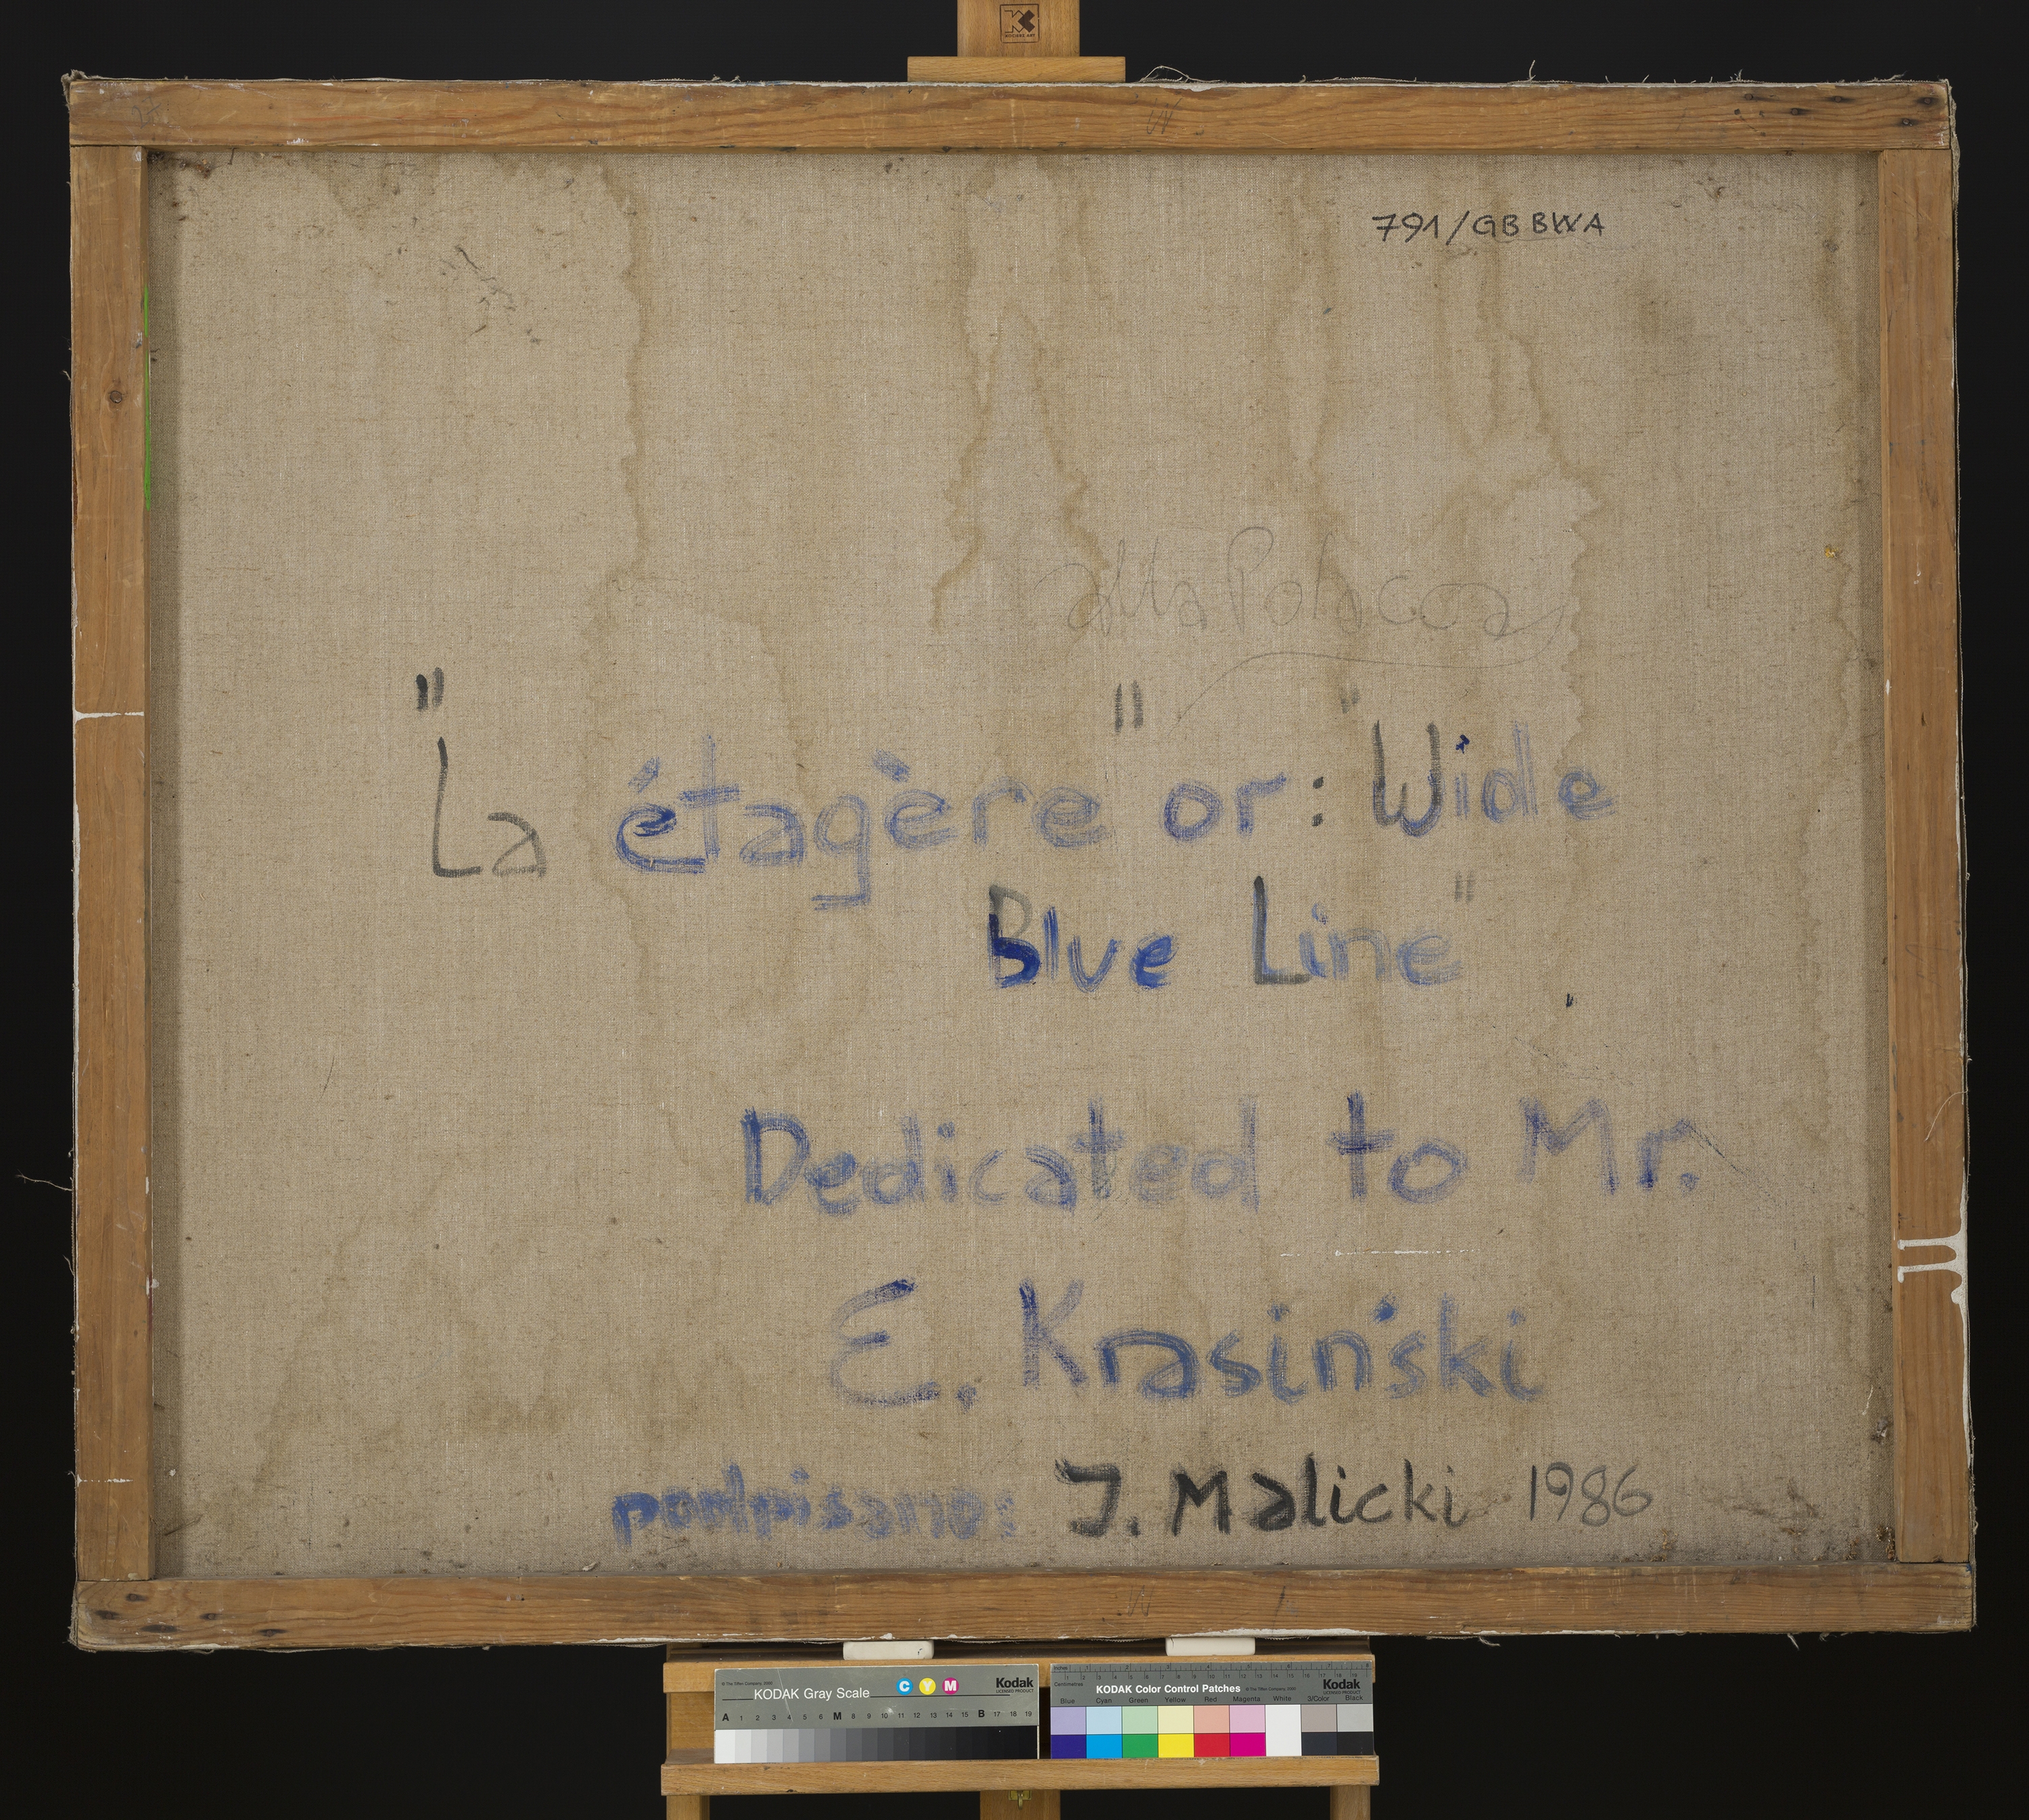 La étagère or Wide Blue Line Dedicated to Mr. E. Krasiński